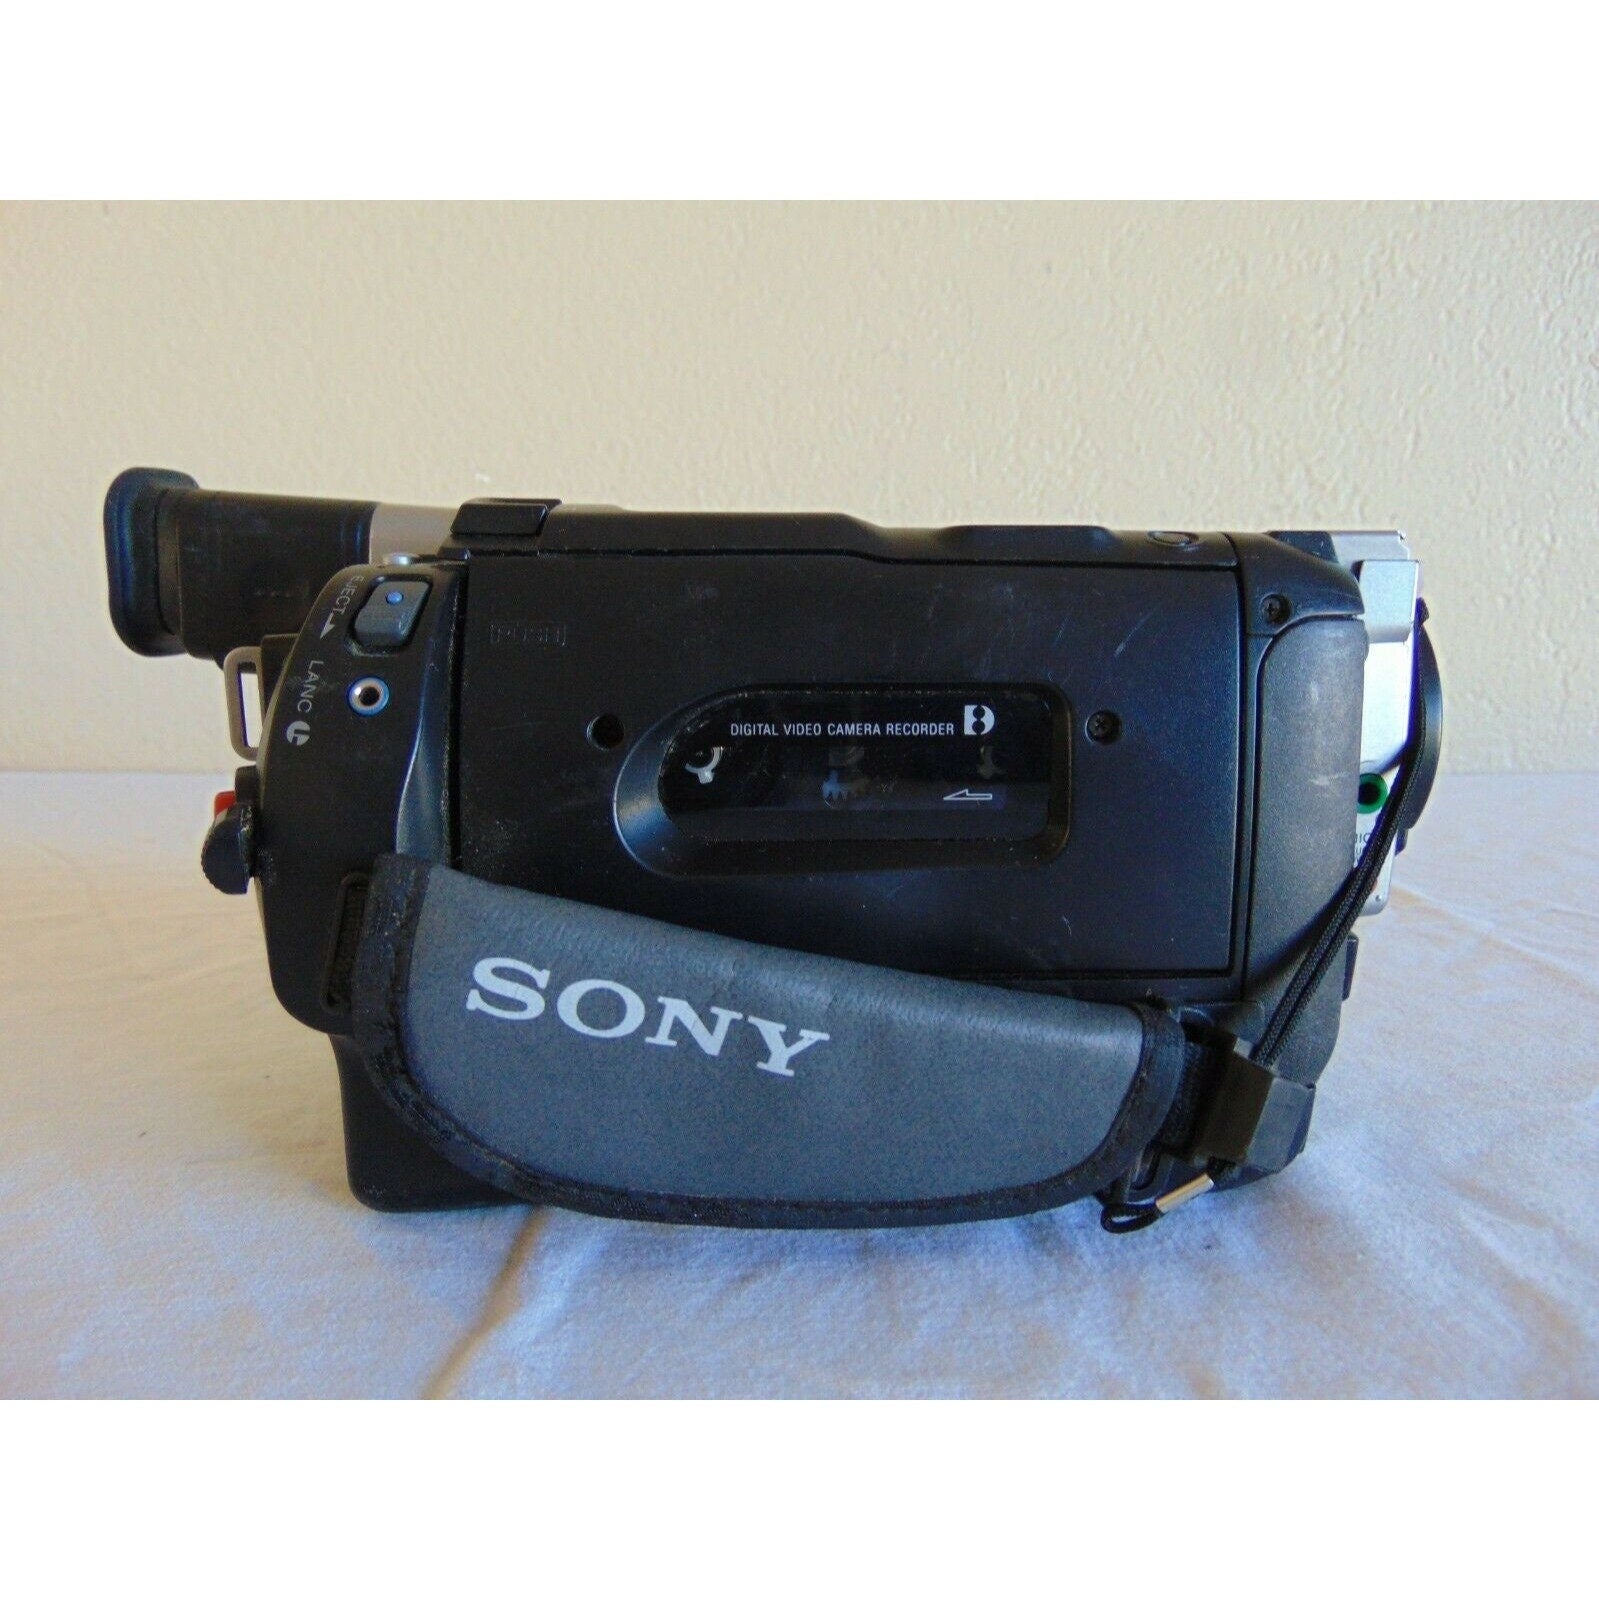 Sony Handycam DCR-TRV310 Digital8 Video Camera